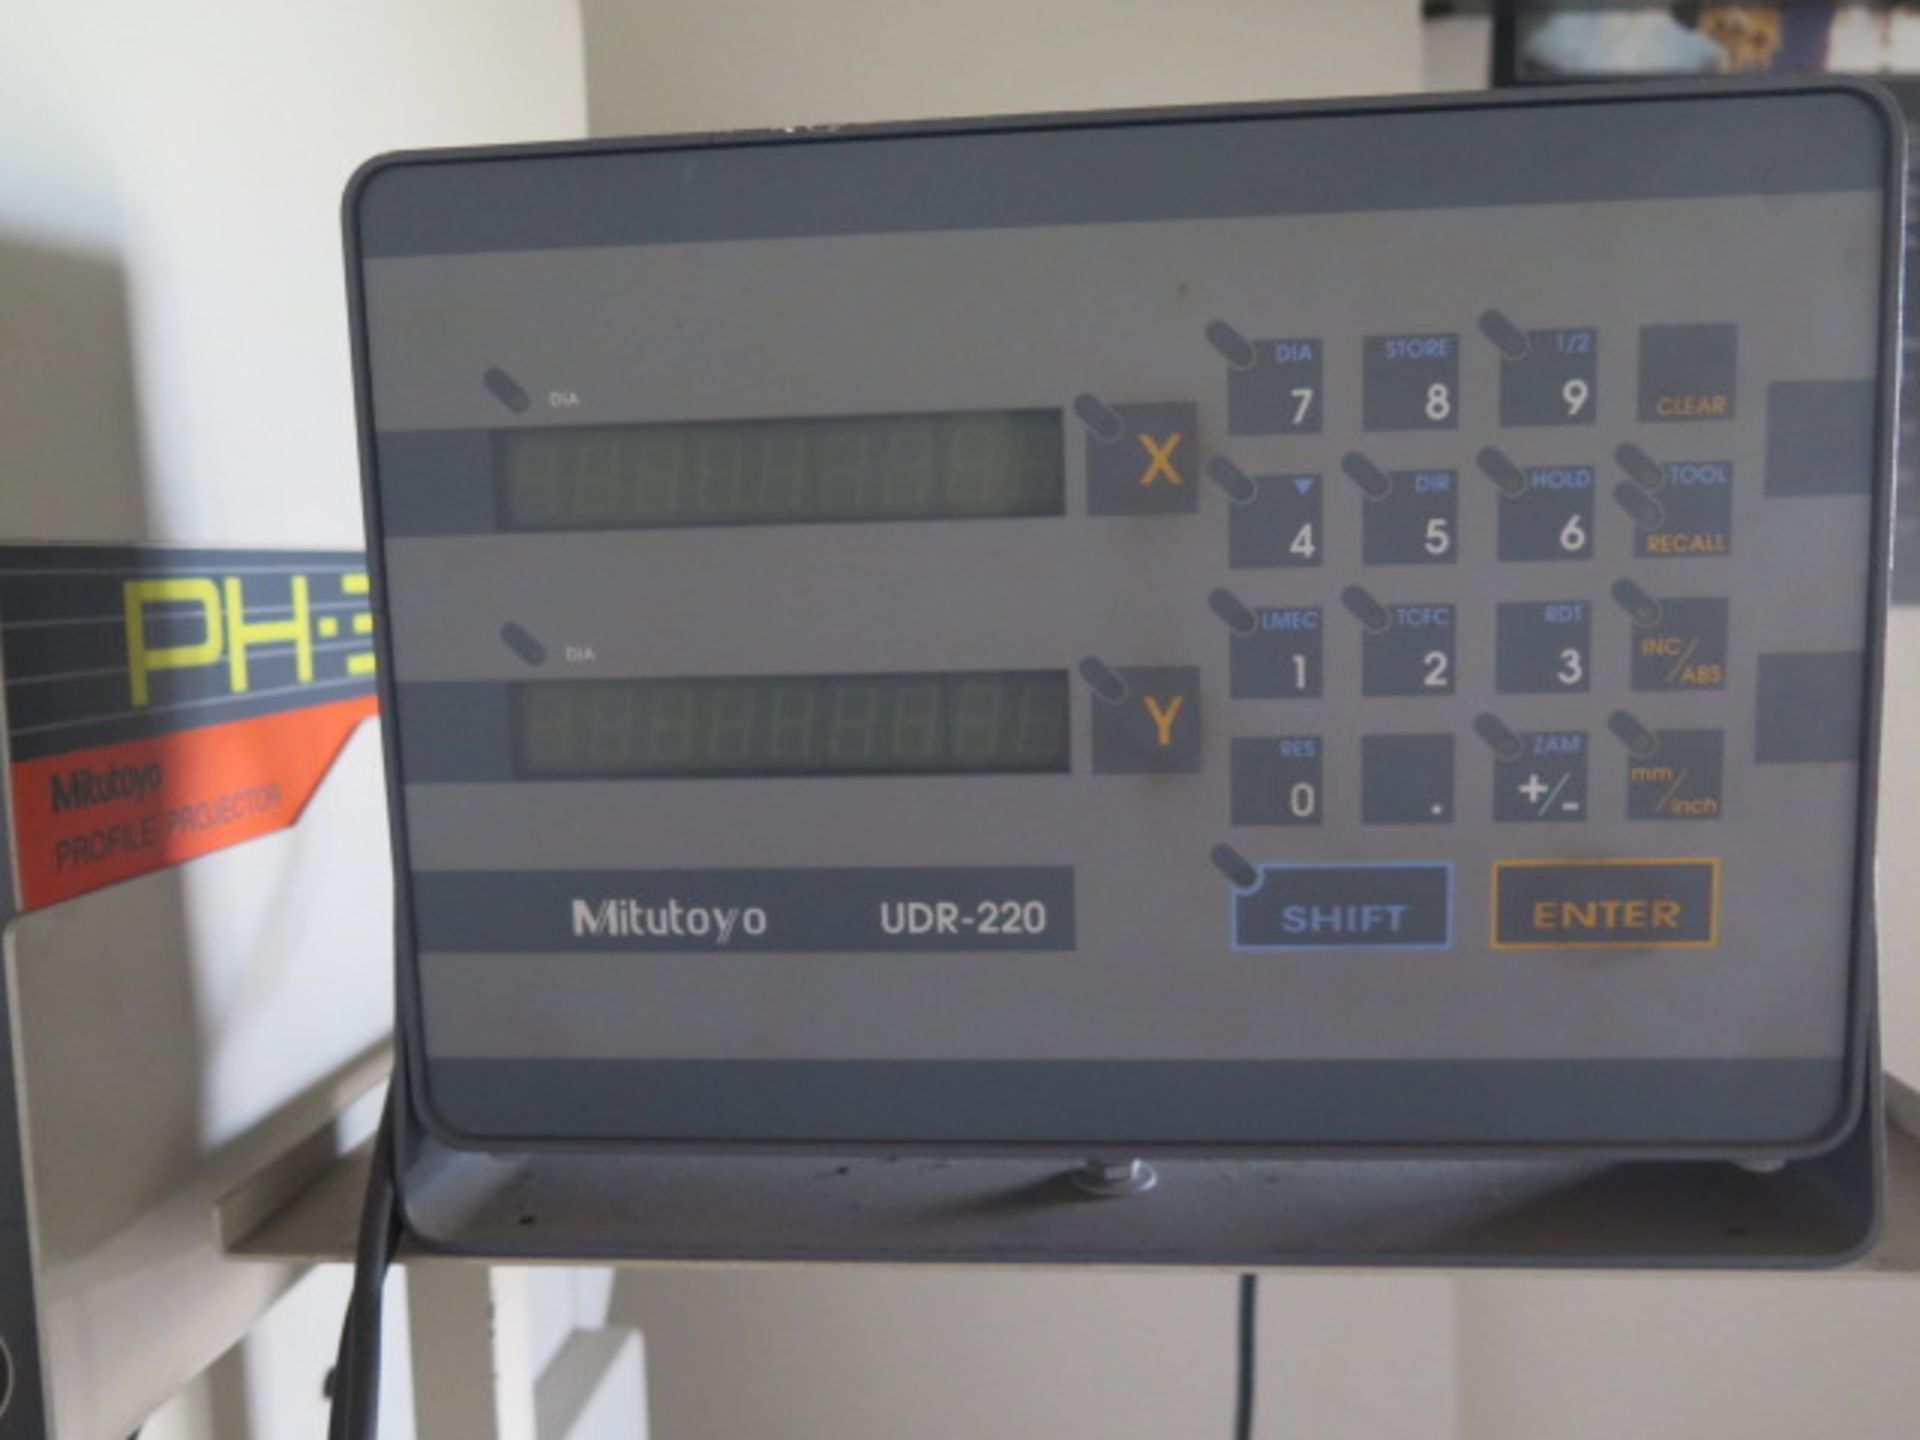 Mitutoyo PH-3500 14” Optical Comparator s/n 750161 w/ Mitutoyo UDR-220 Programmable DRO, Digital - Bild 6 aus 7